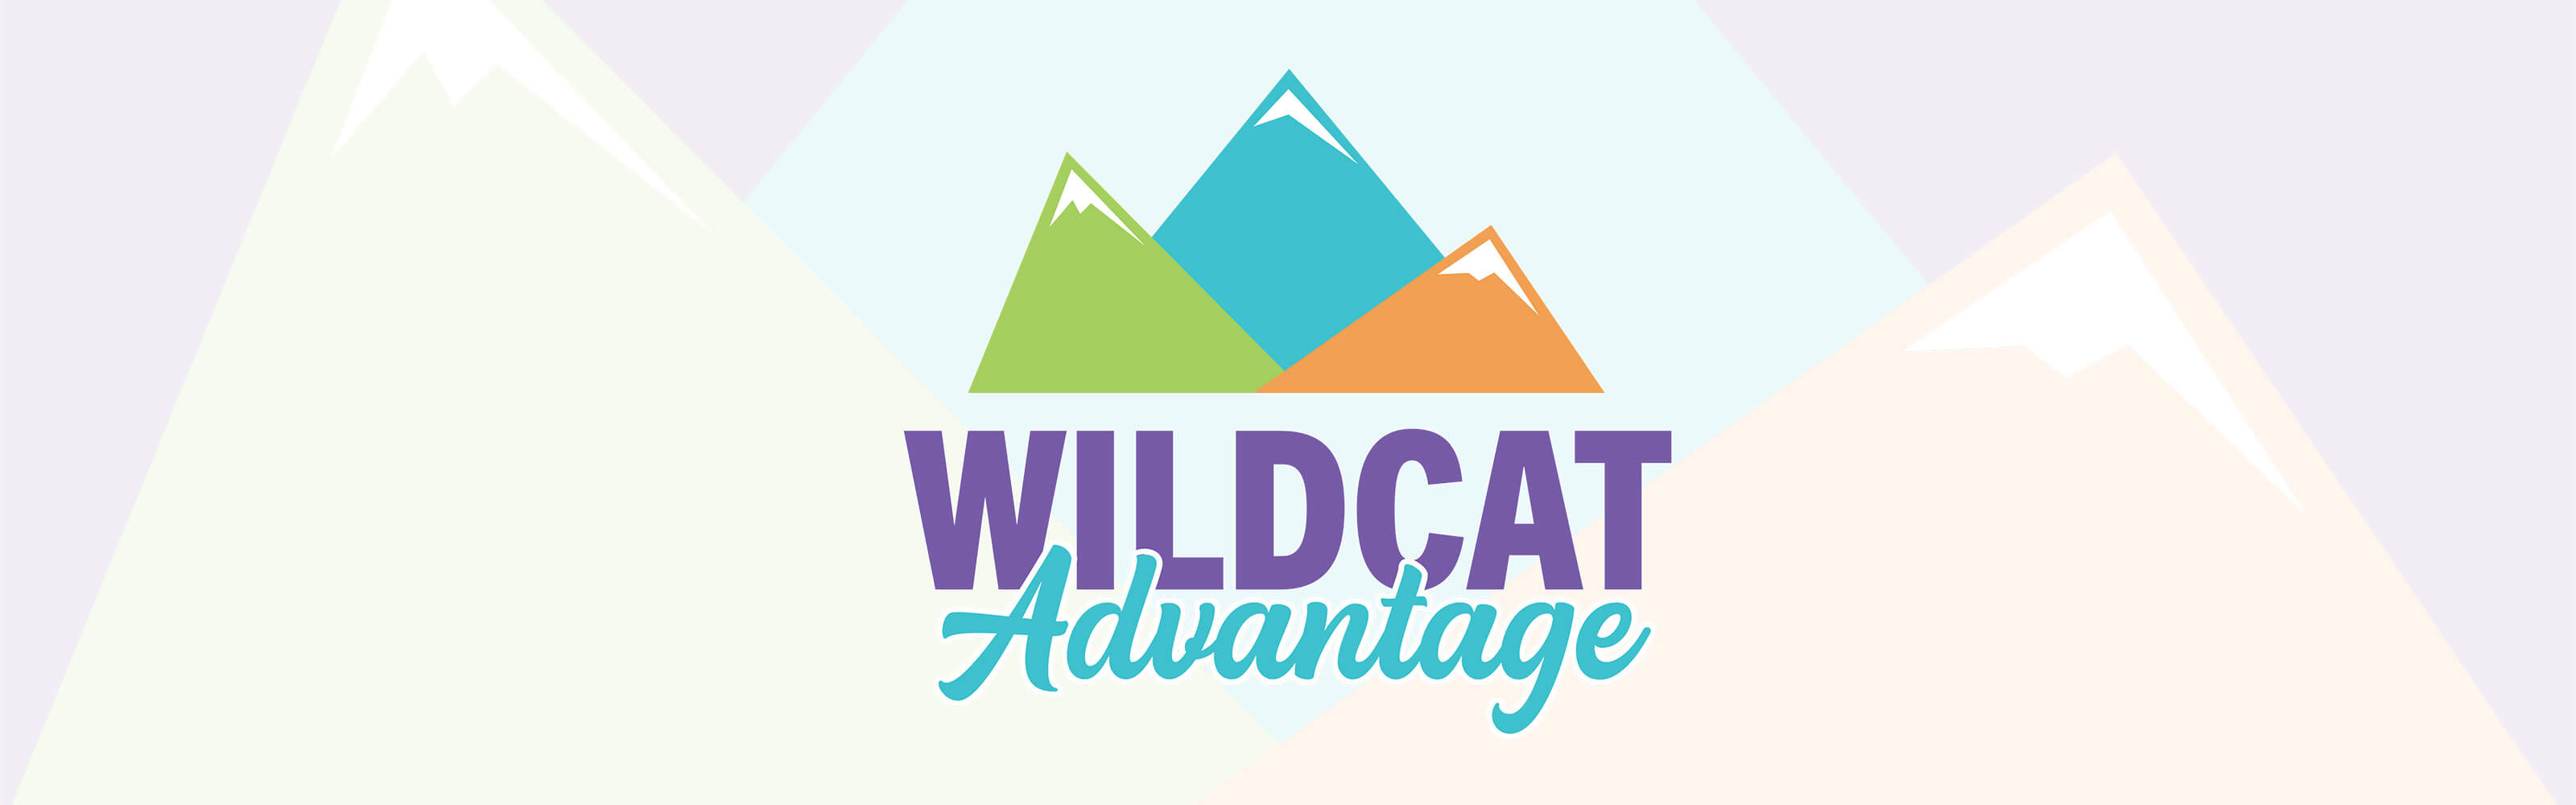 Wildcat Advantage